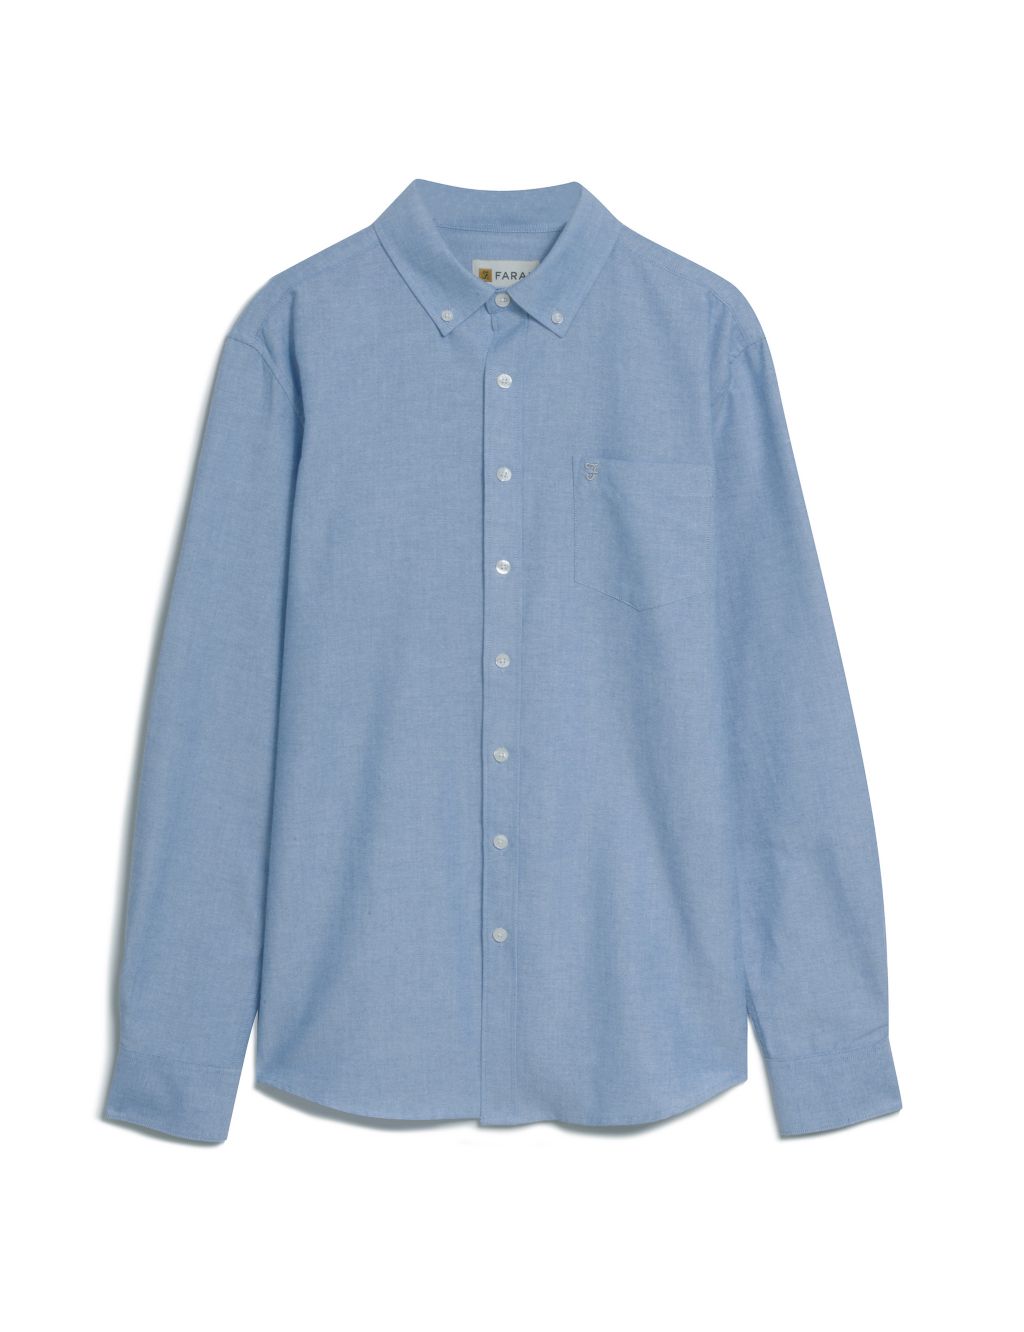 Cotton Blend Oxford Shirt image 2